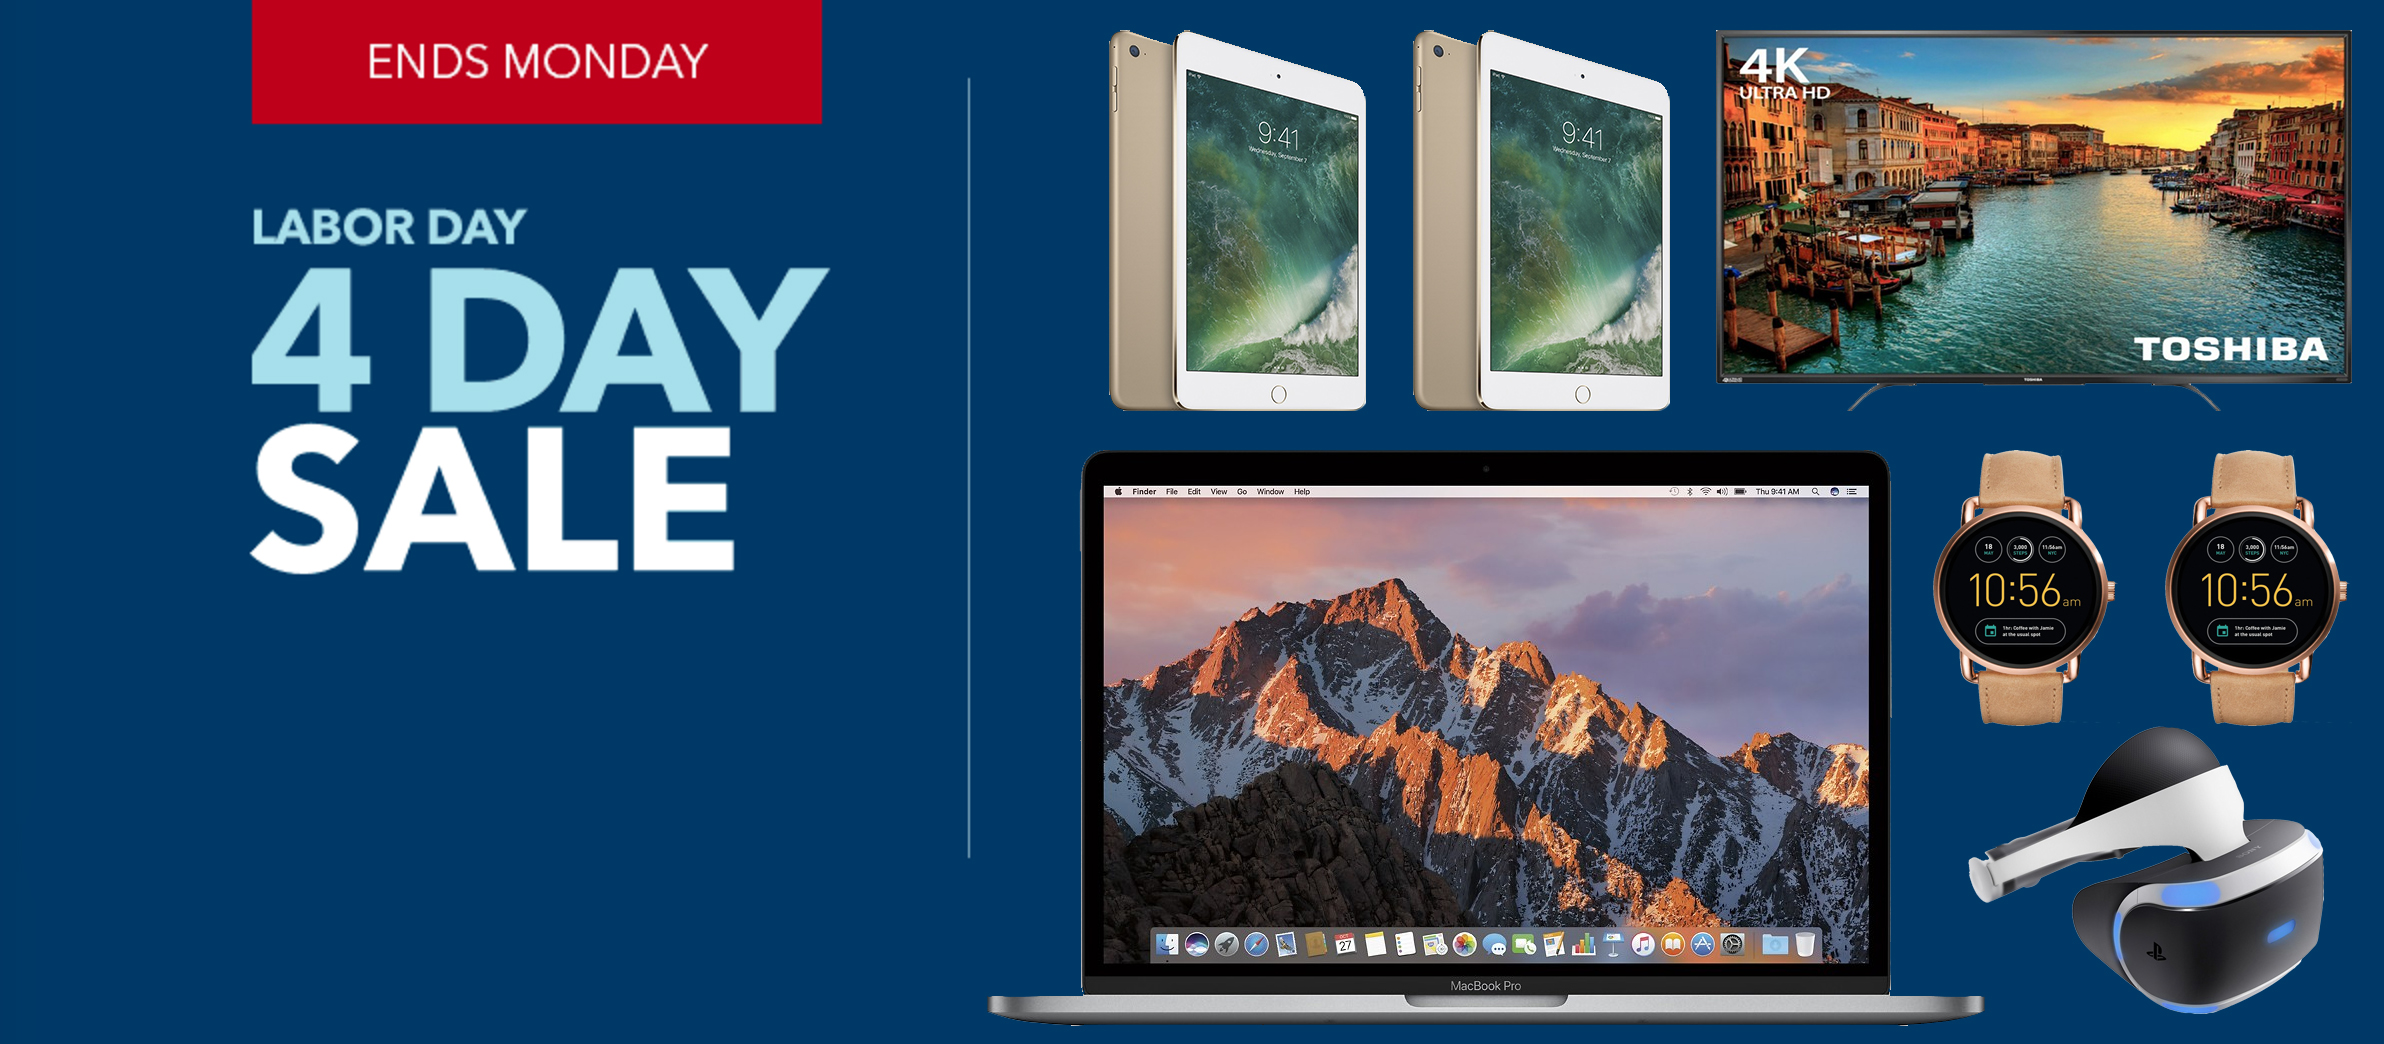 Best Buy's Labor Day Sale is now live w/ 500 off MacBook/iMac, iPad